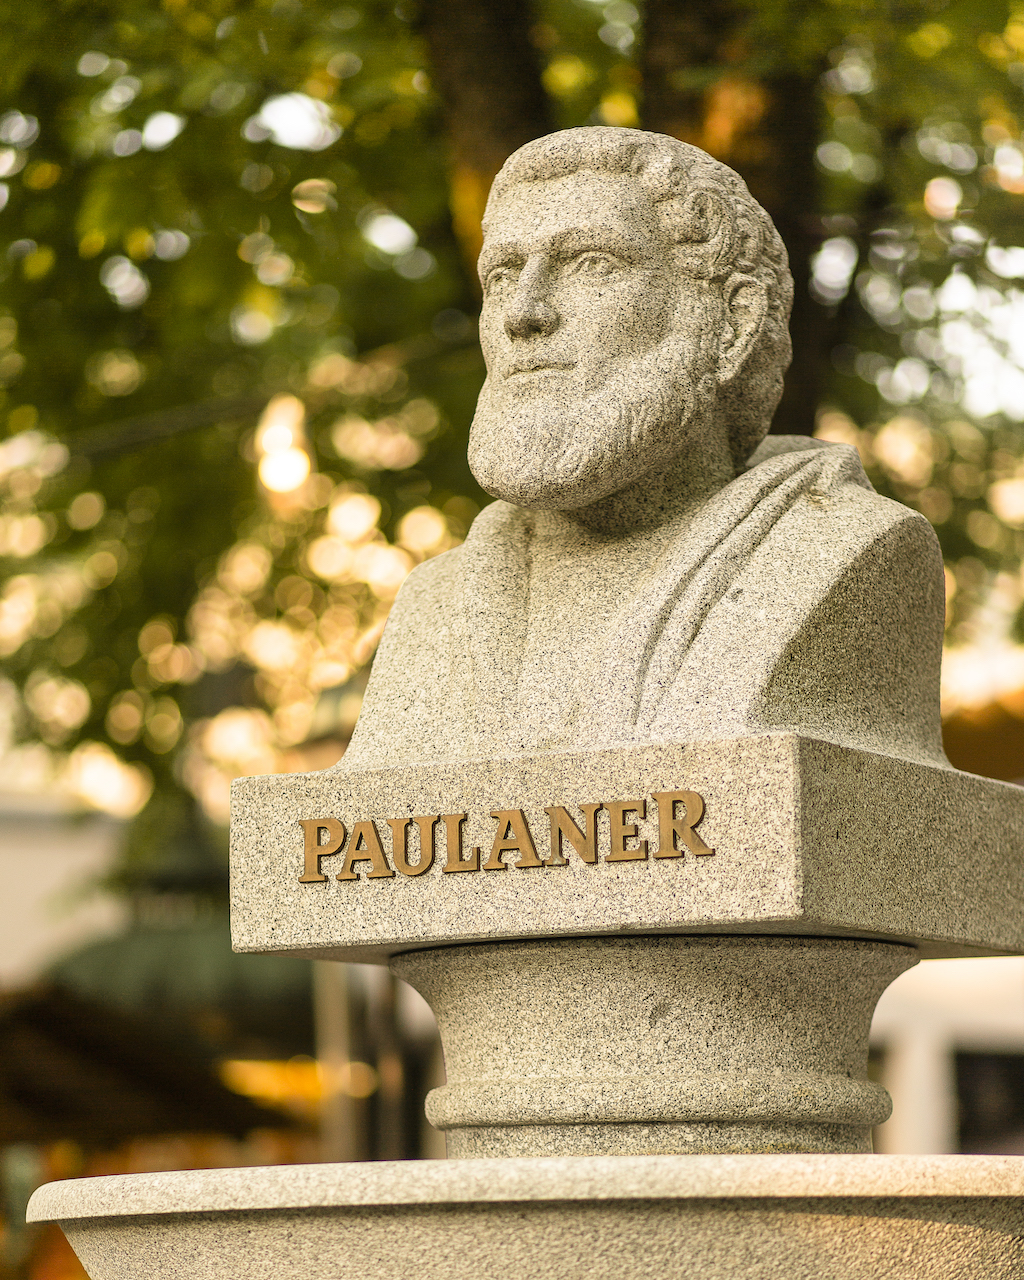 The iconic Paulaner bust